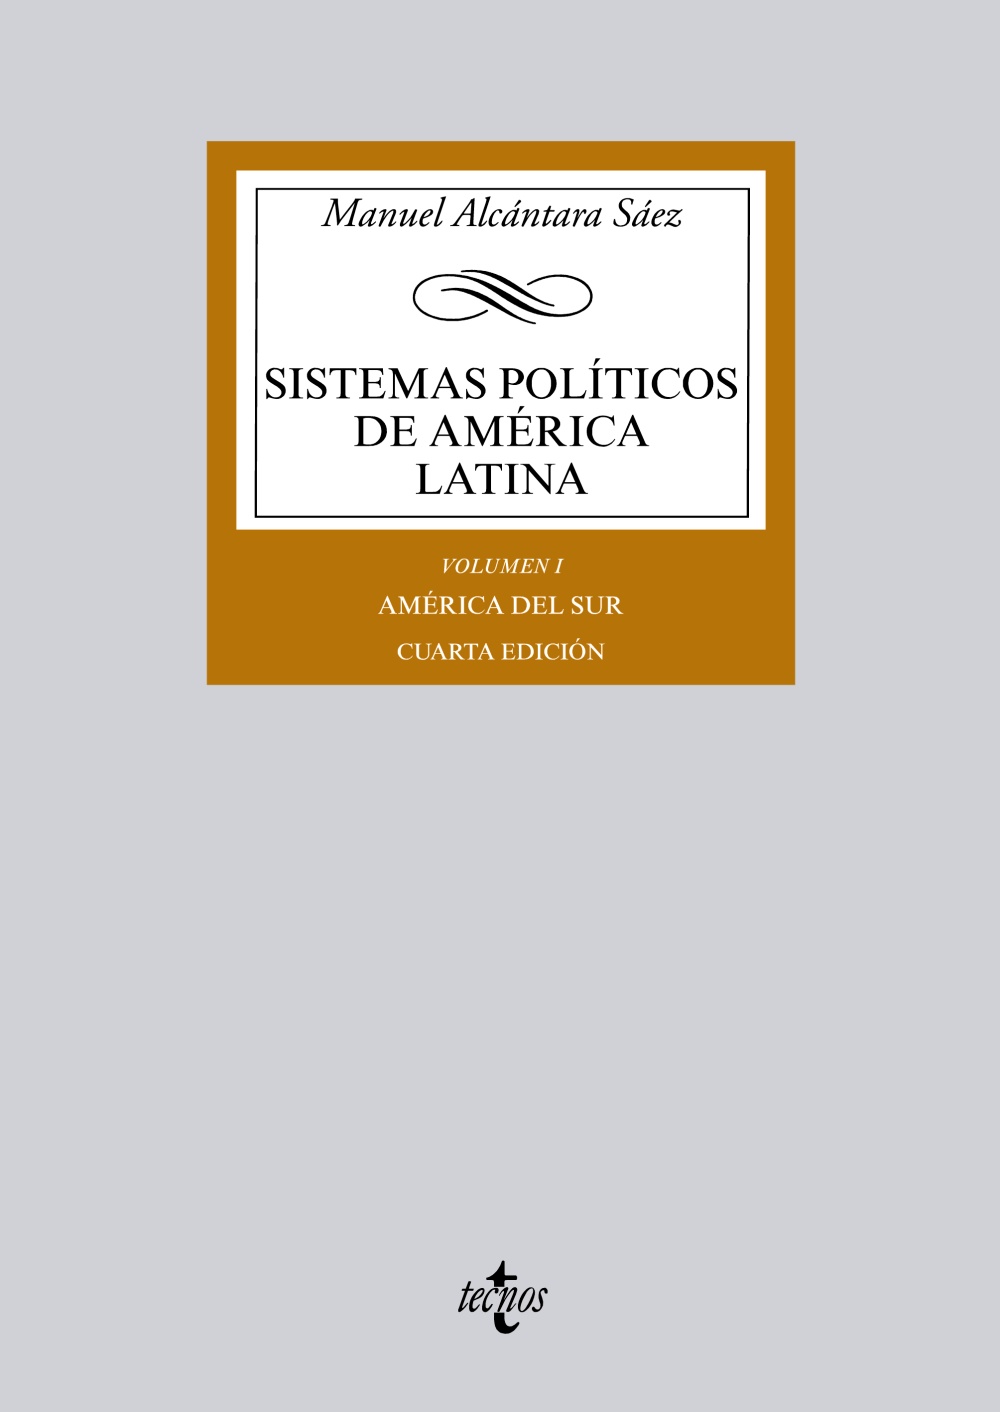 Sistemas políticos de América Latina